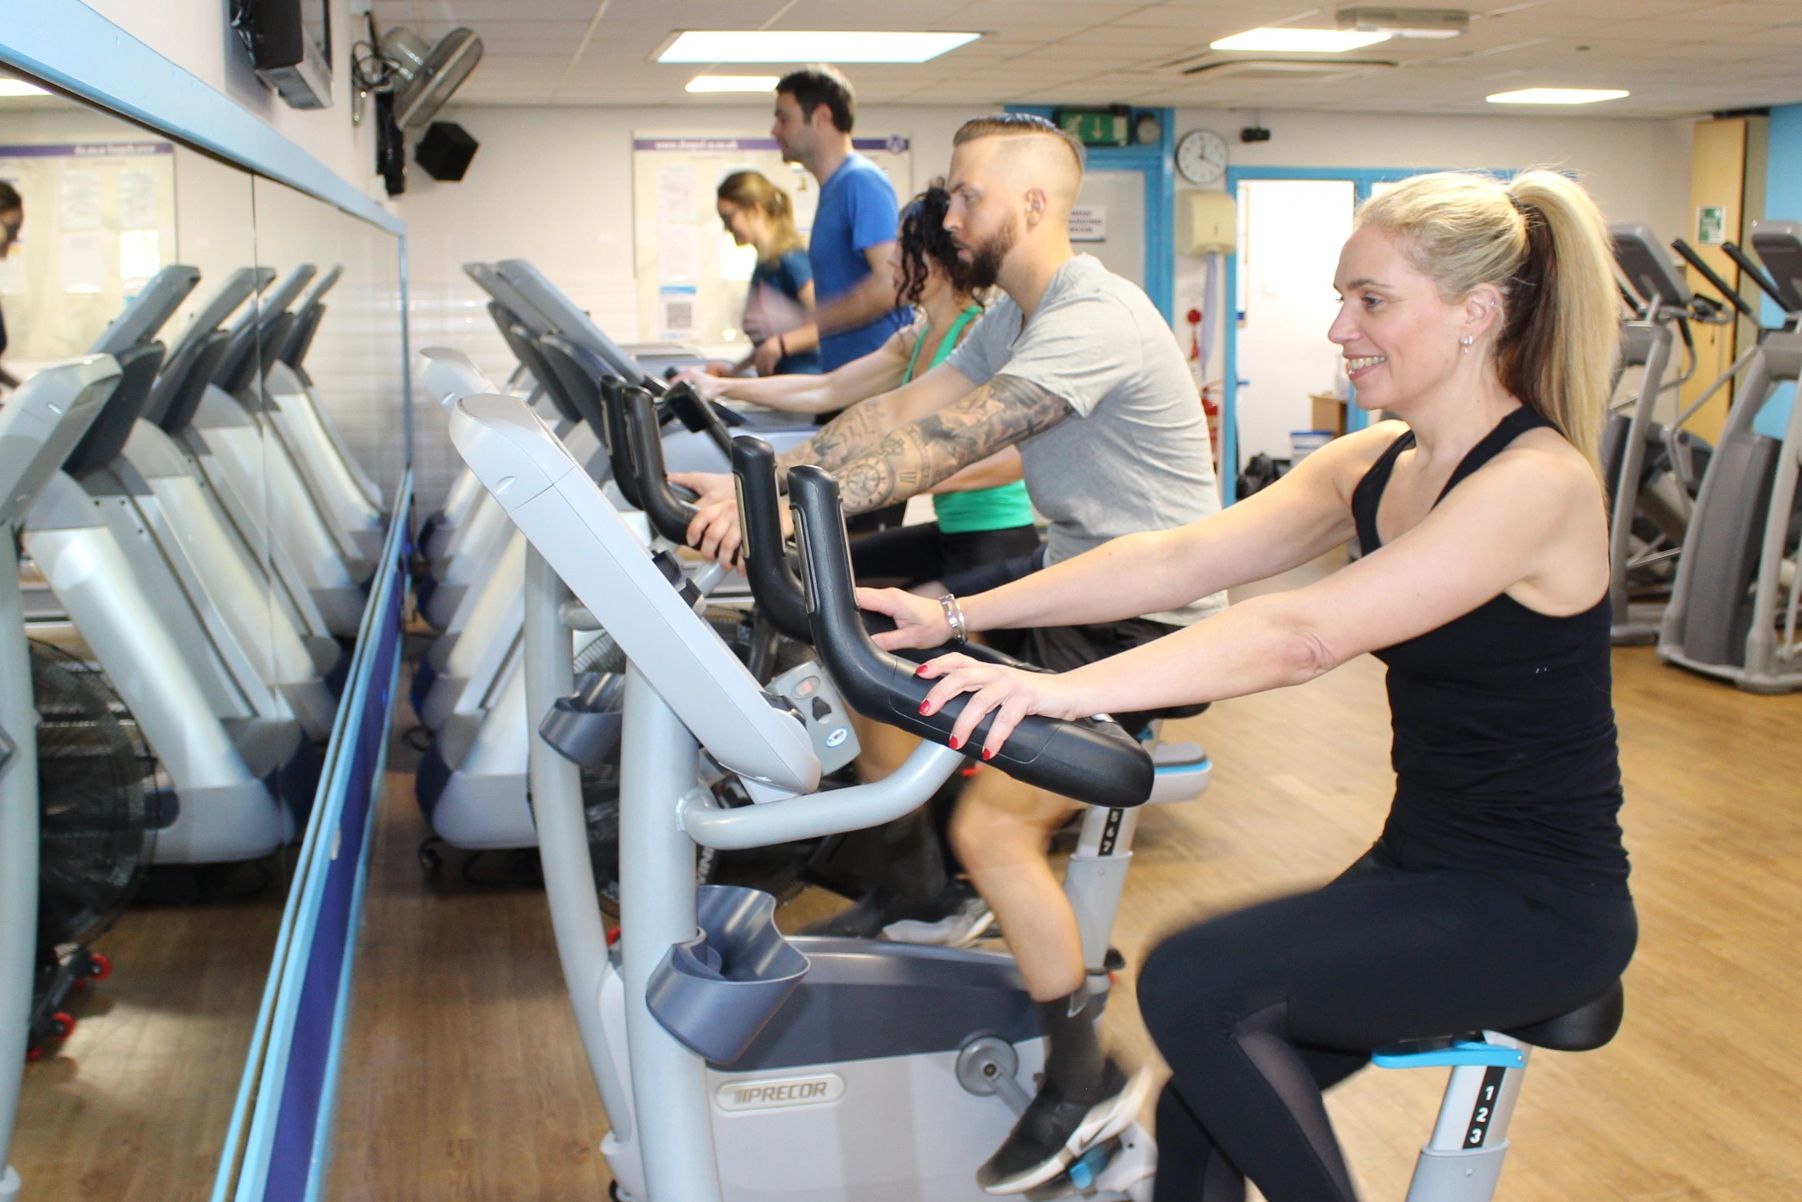 Members exercising at Chapel Allerton Gym in Leeds